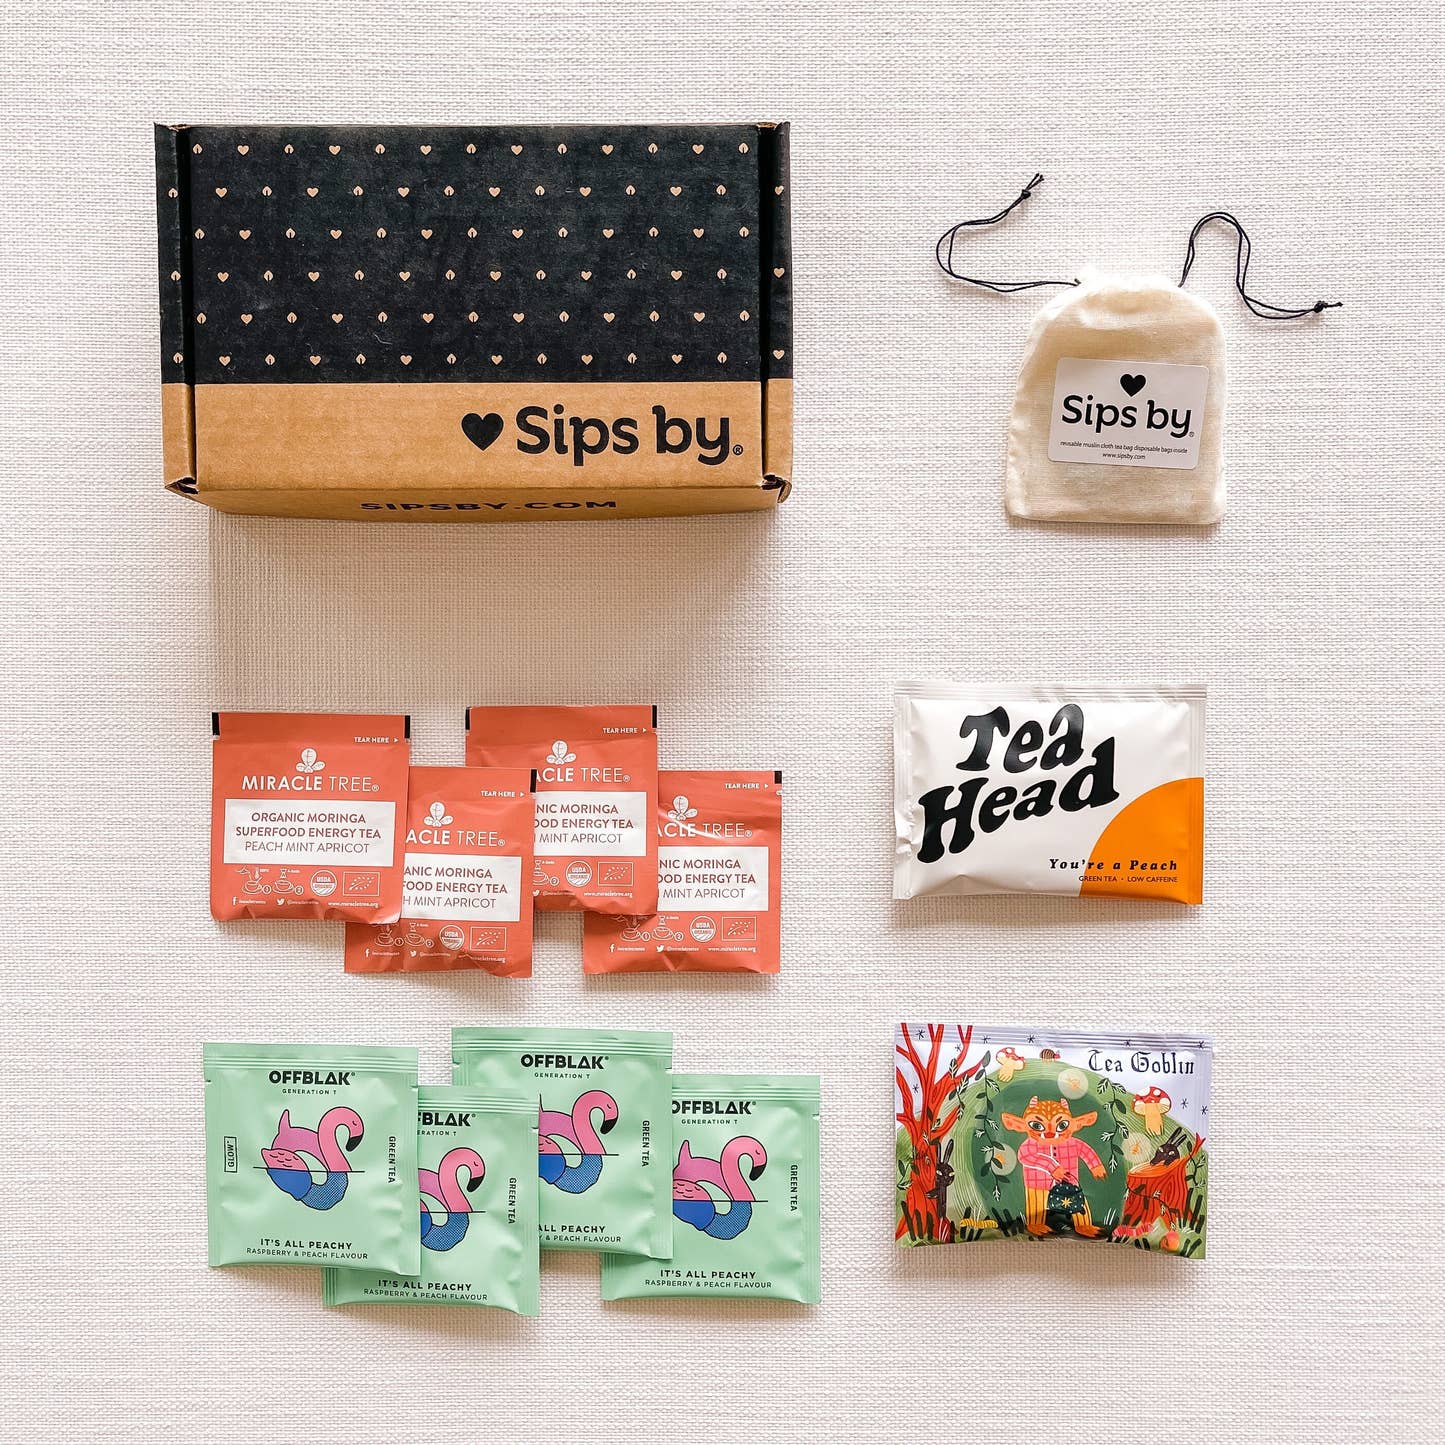 Sips by Box with peach tea samples from Tea Head, Miracle Tree, OFFBLAK, and Tea Goblin